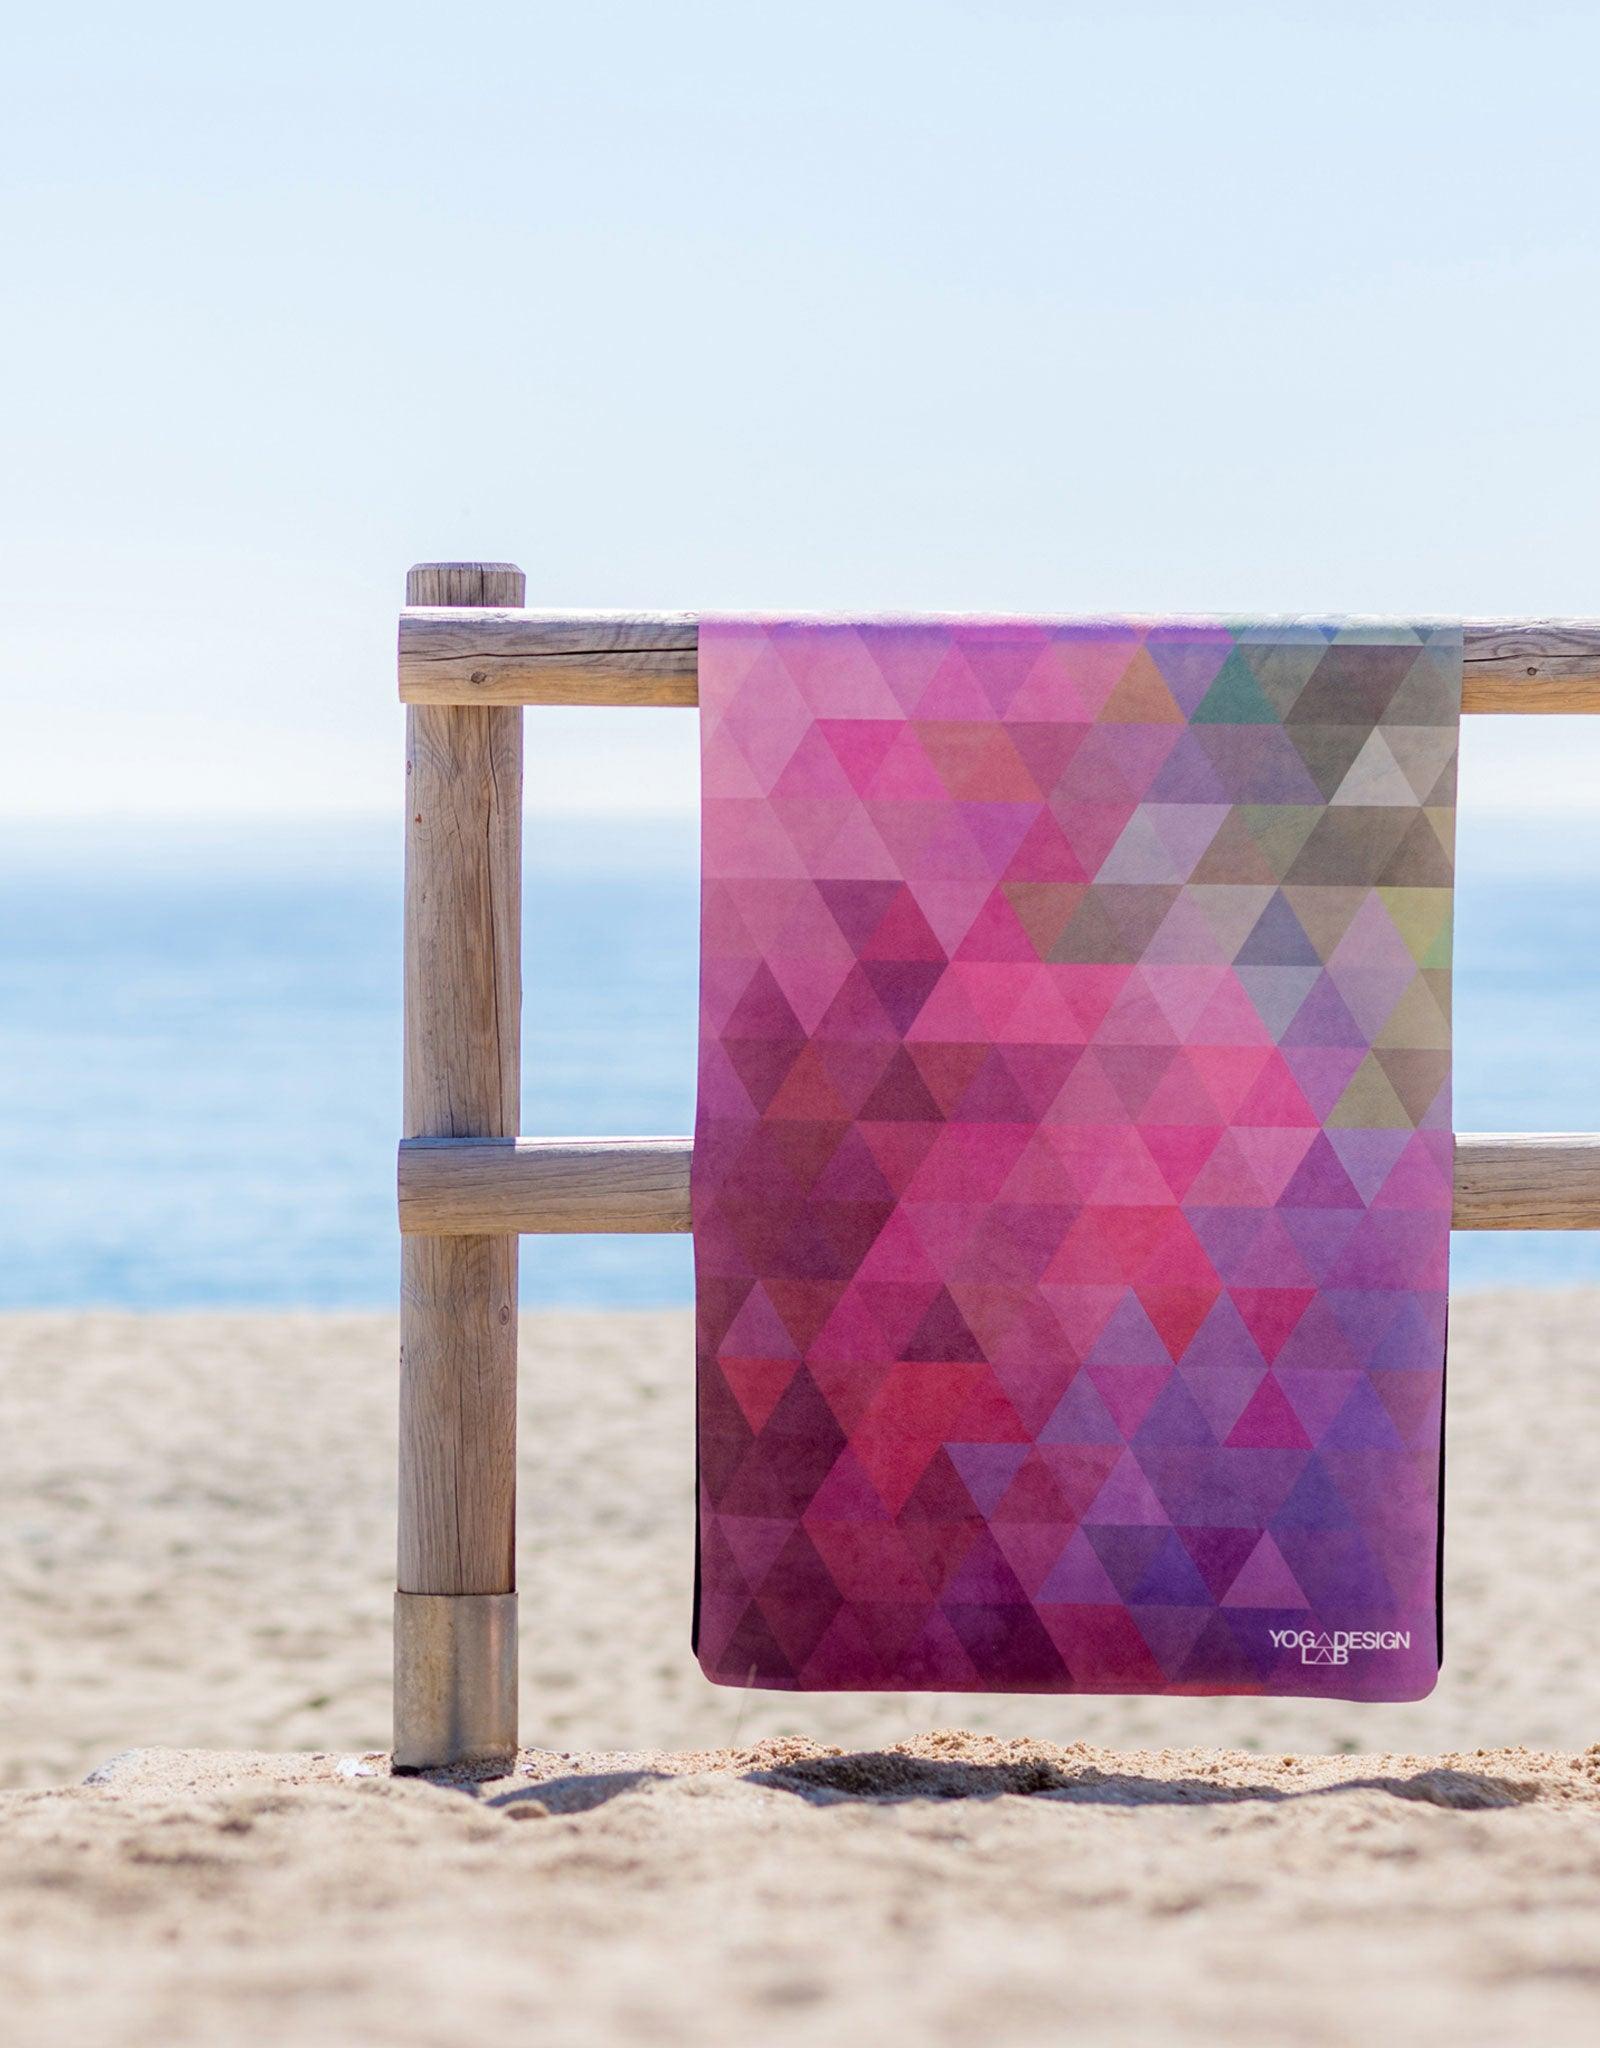 Combo Yoga Mat: 2-in-1 (Mat + Towel) - Tribeca Sand - Best Hot Yoga Mat  Towel